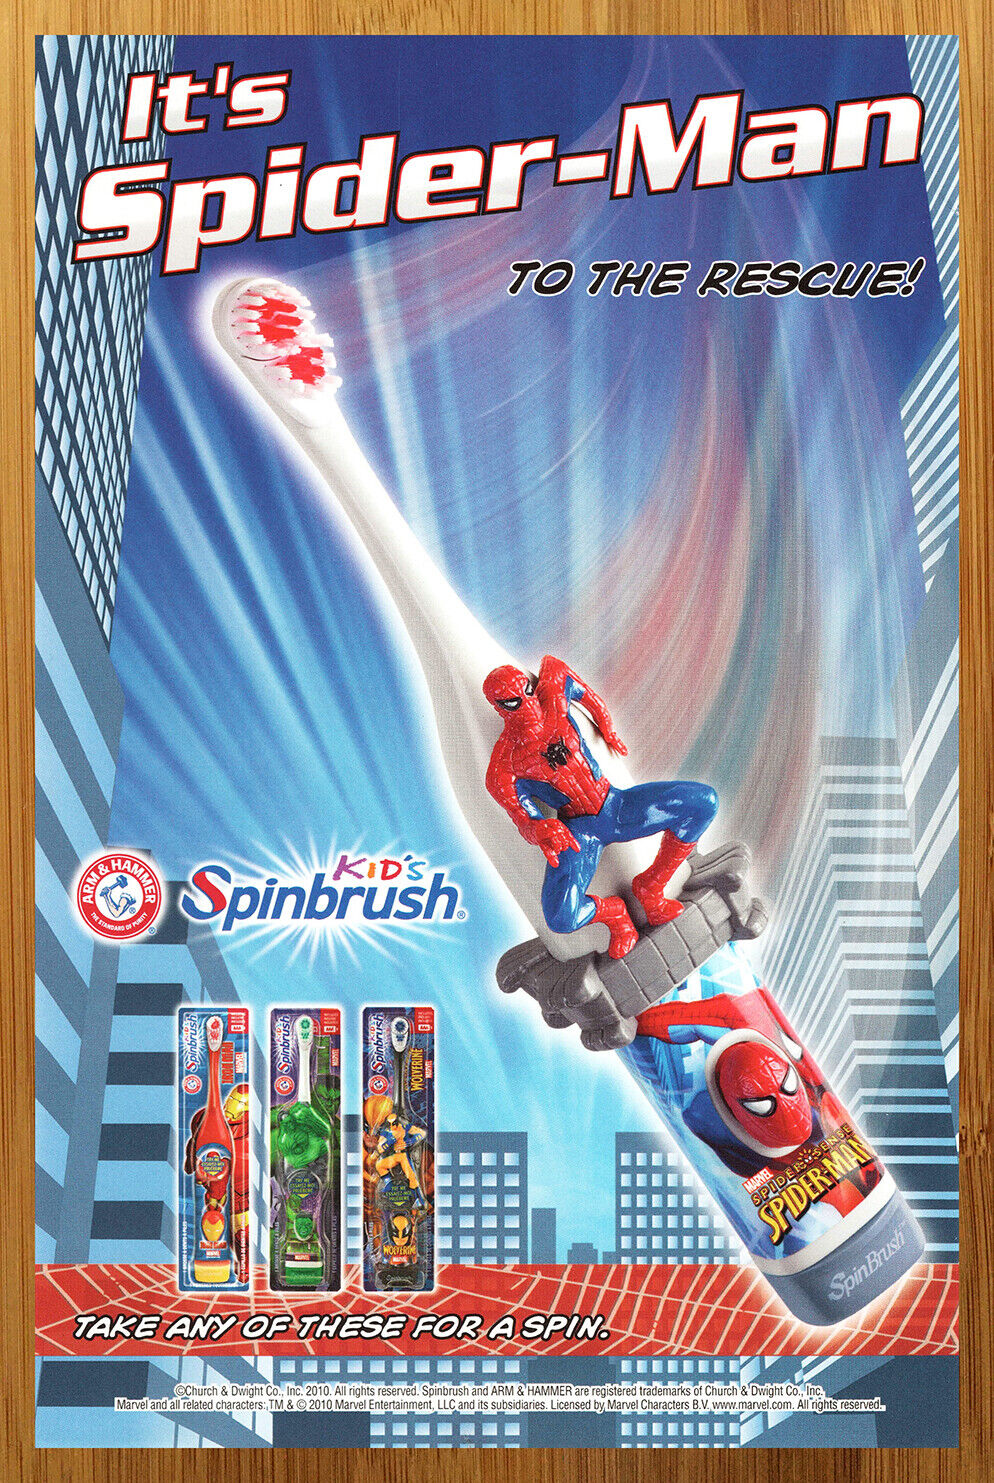 2010 Arm & Hammer Spider-Man Kid\'s Spinbrush Toothbrush Print Ad/Poster Marvel